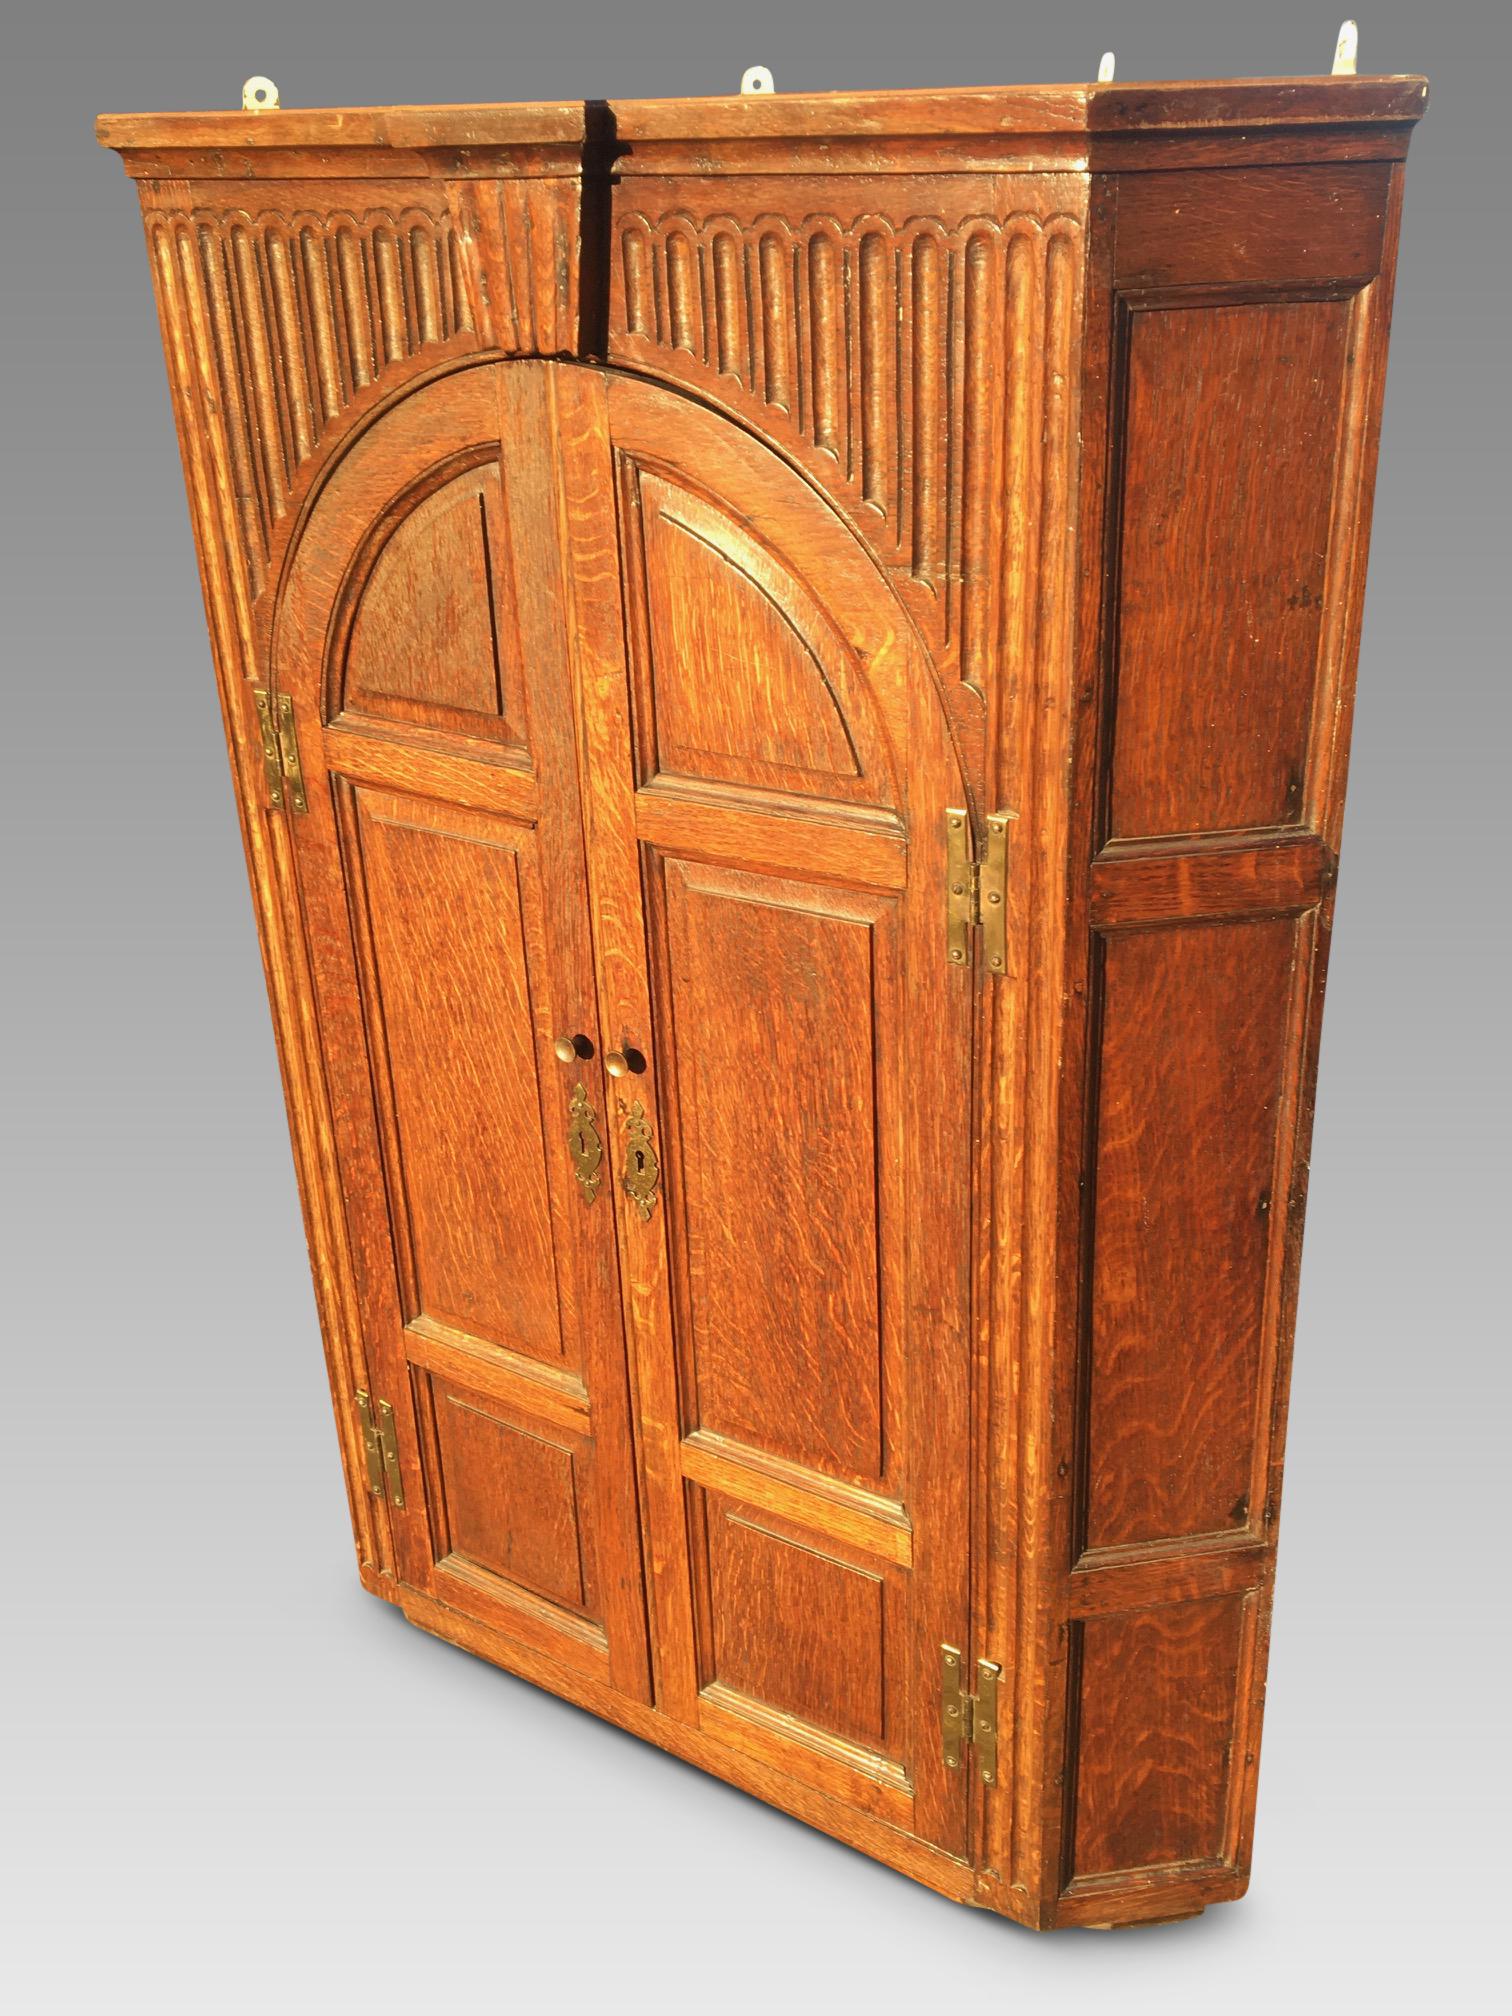 Hand-Crafted Antique Oak Hanging Corner Cabinet, English, circa 1800